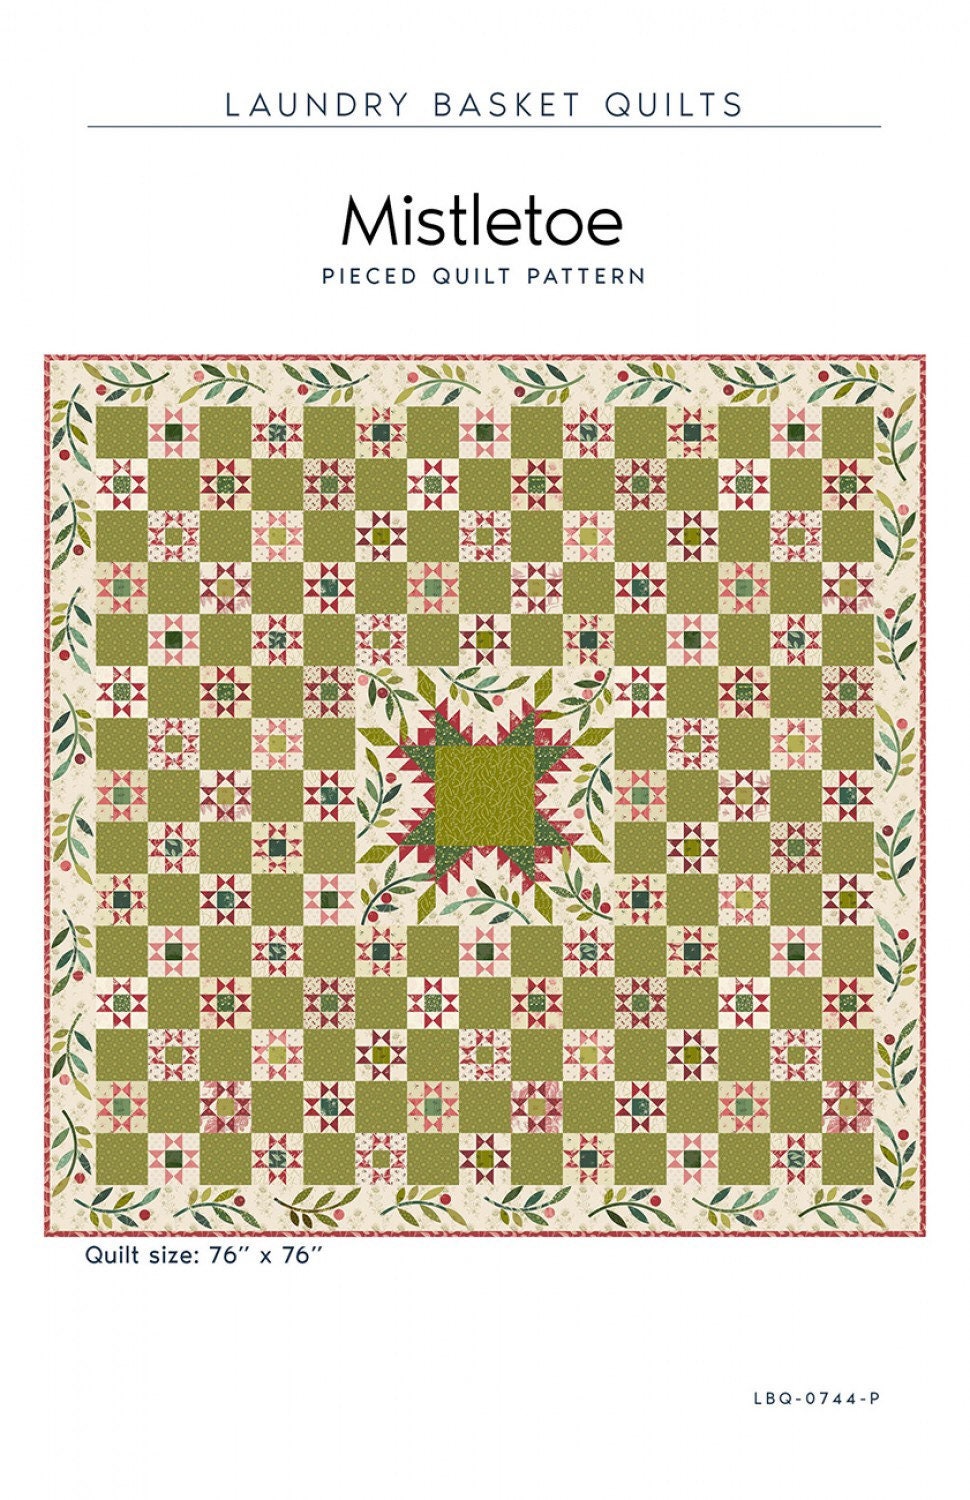 Mistletoe Quilt Pattern - Laundry Basket Quilts - Edyta Sitar - Christmas Tree Quilt Pattern - Christmas Quilt Pattern